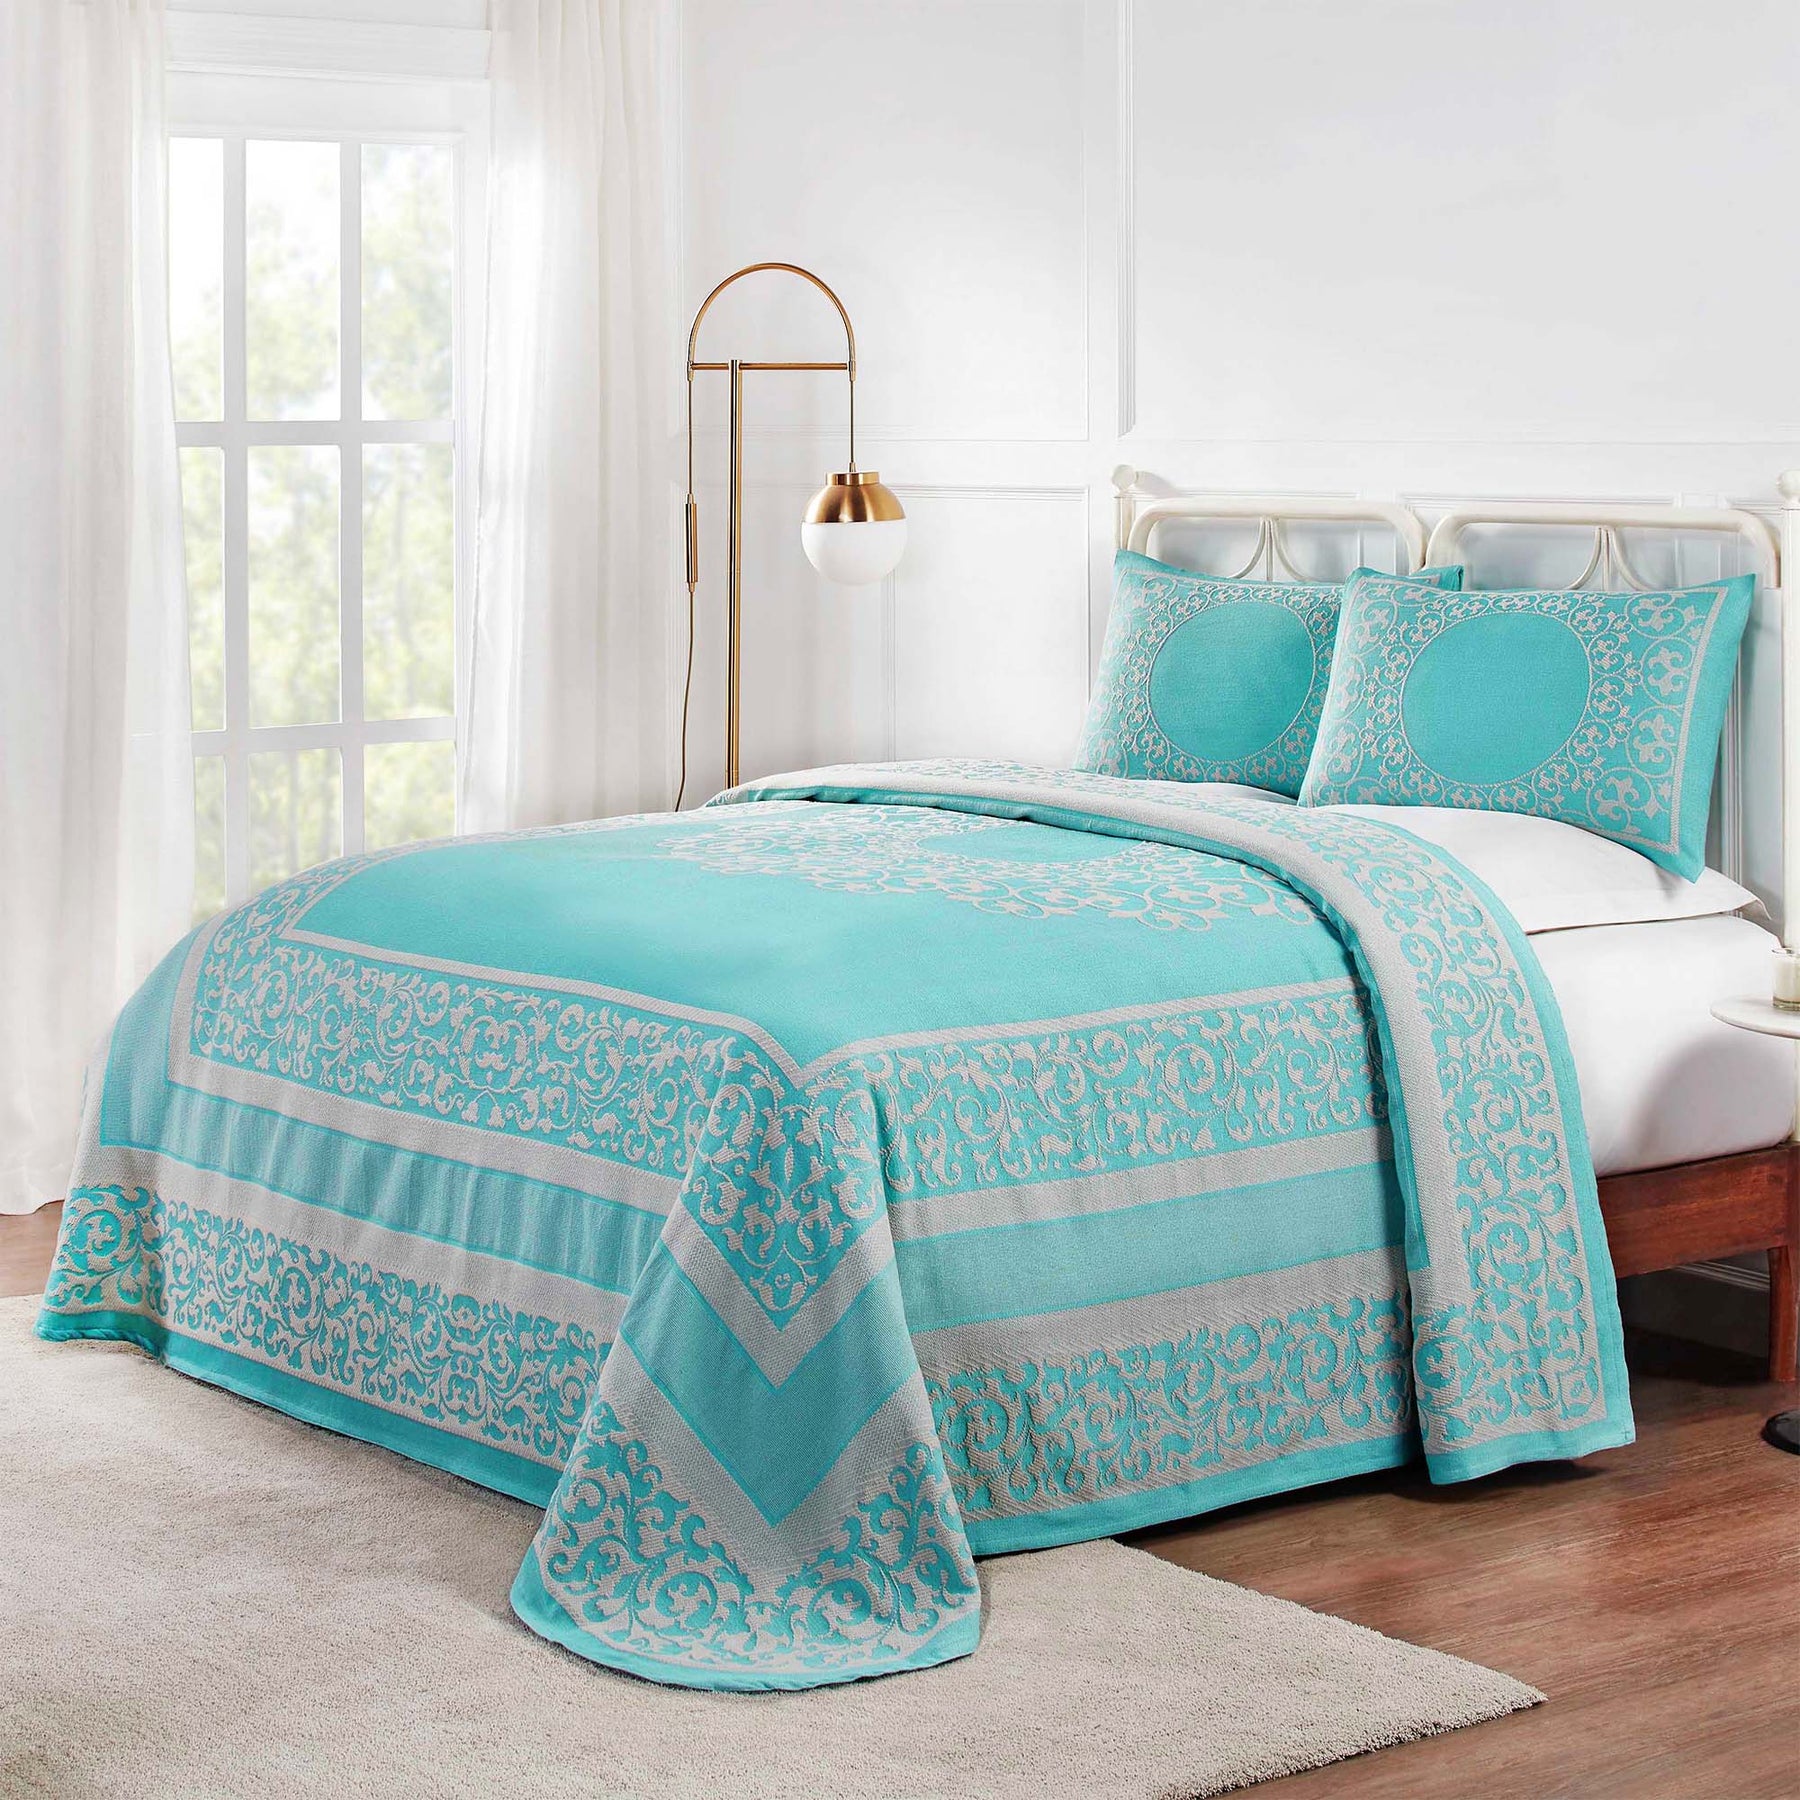 Superior Lyron Cotton Blend Woven Jacquard Vintage Floral Scroll Lightweight Bedspread and Sham Set  - Aqua